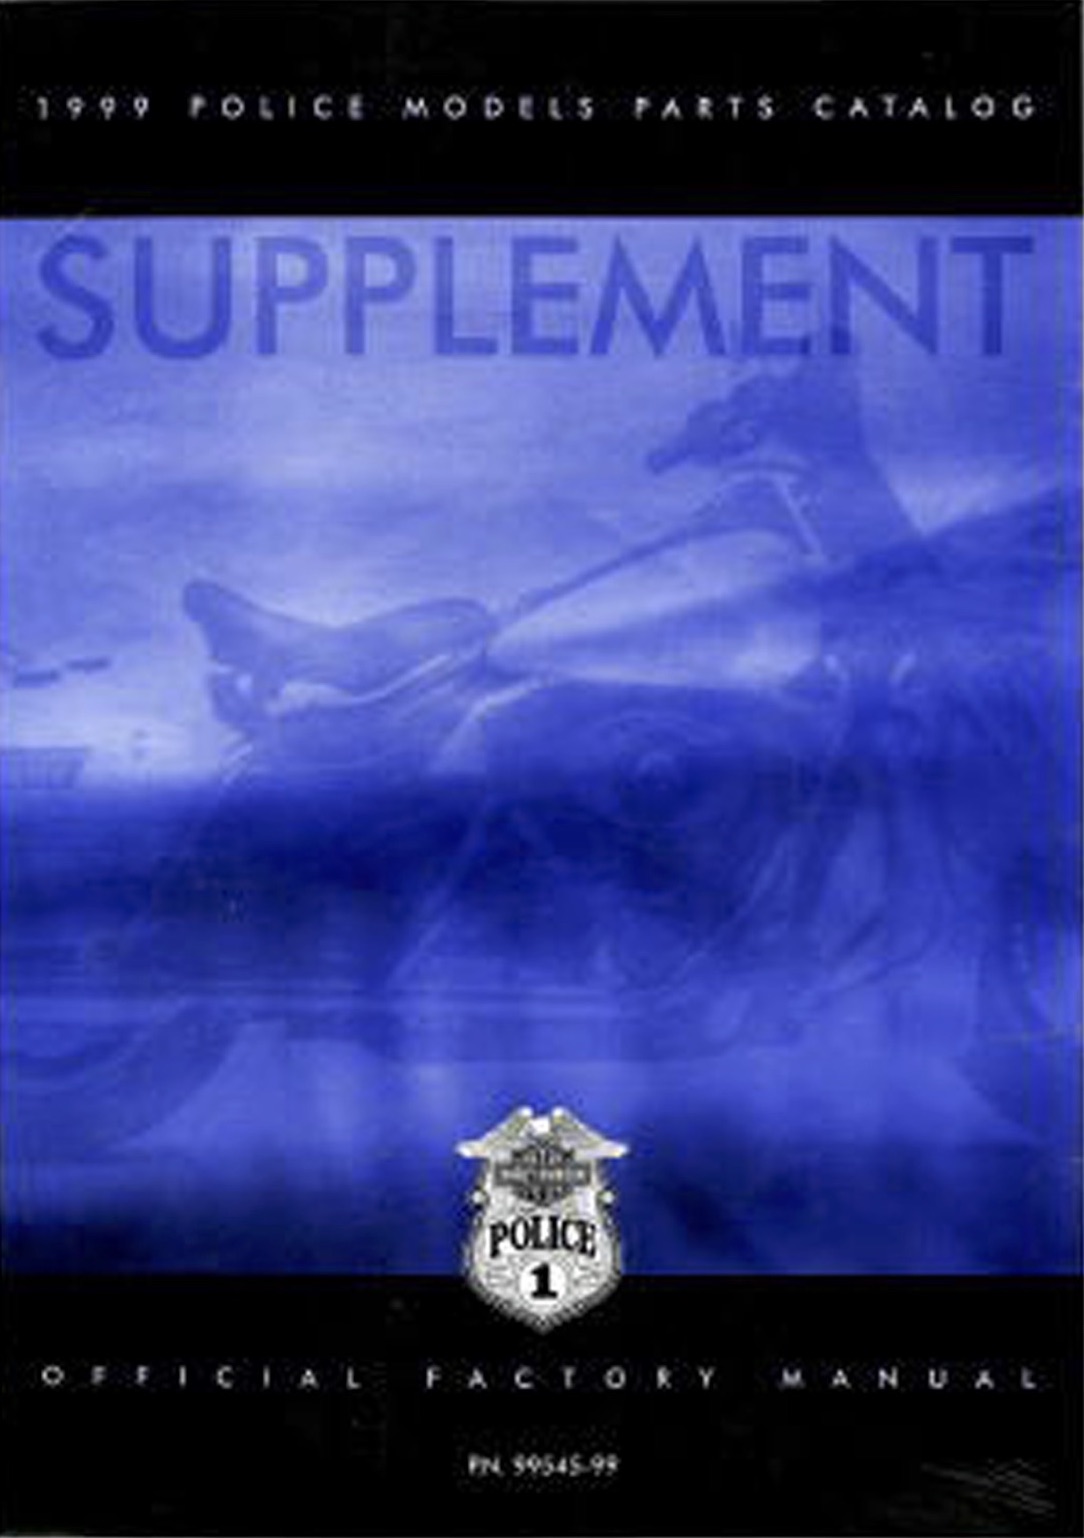 1999 FLT Police Parts Catalog Supplement